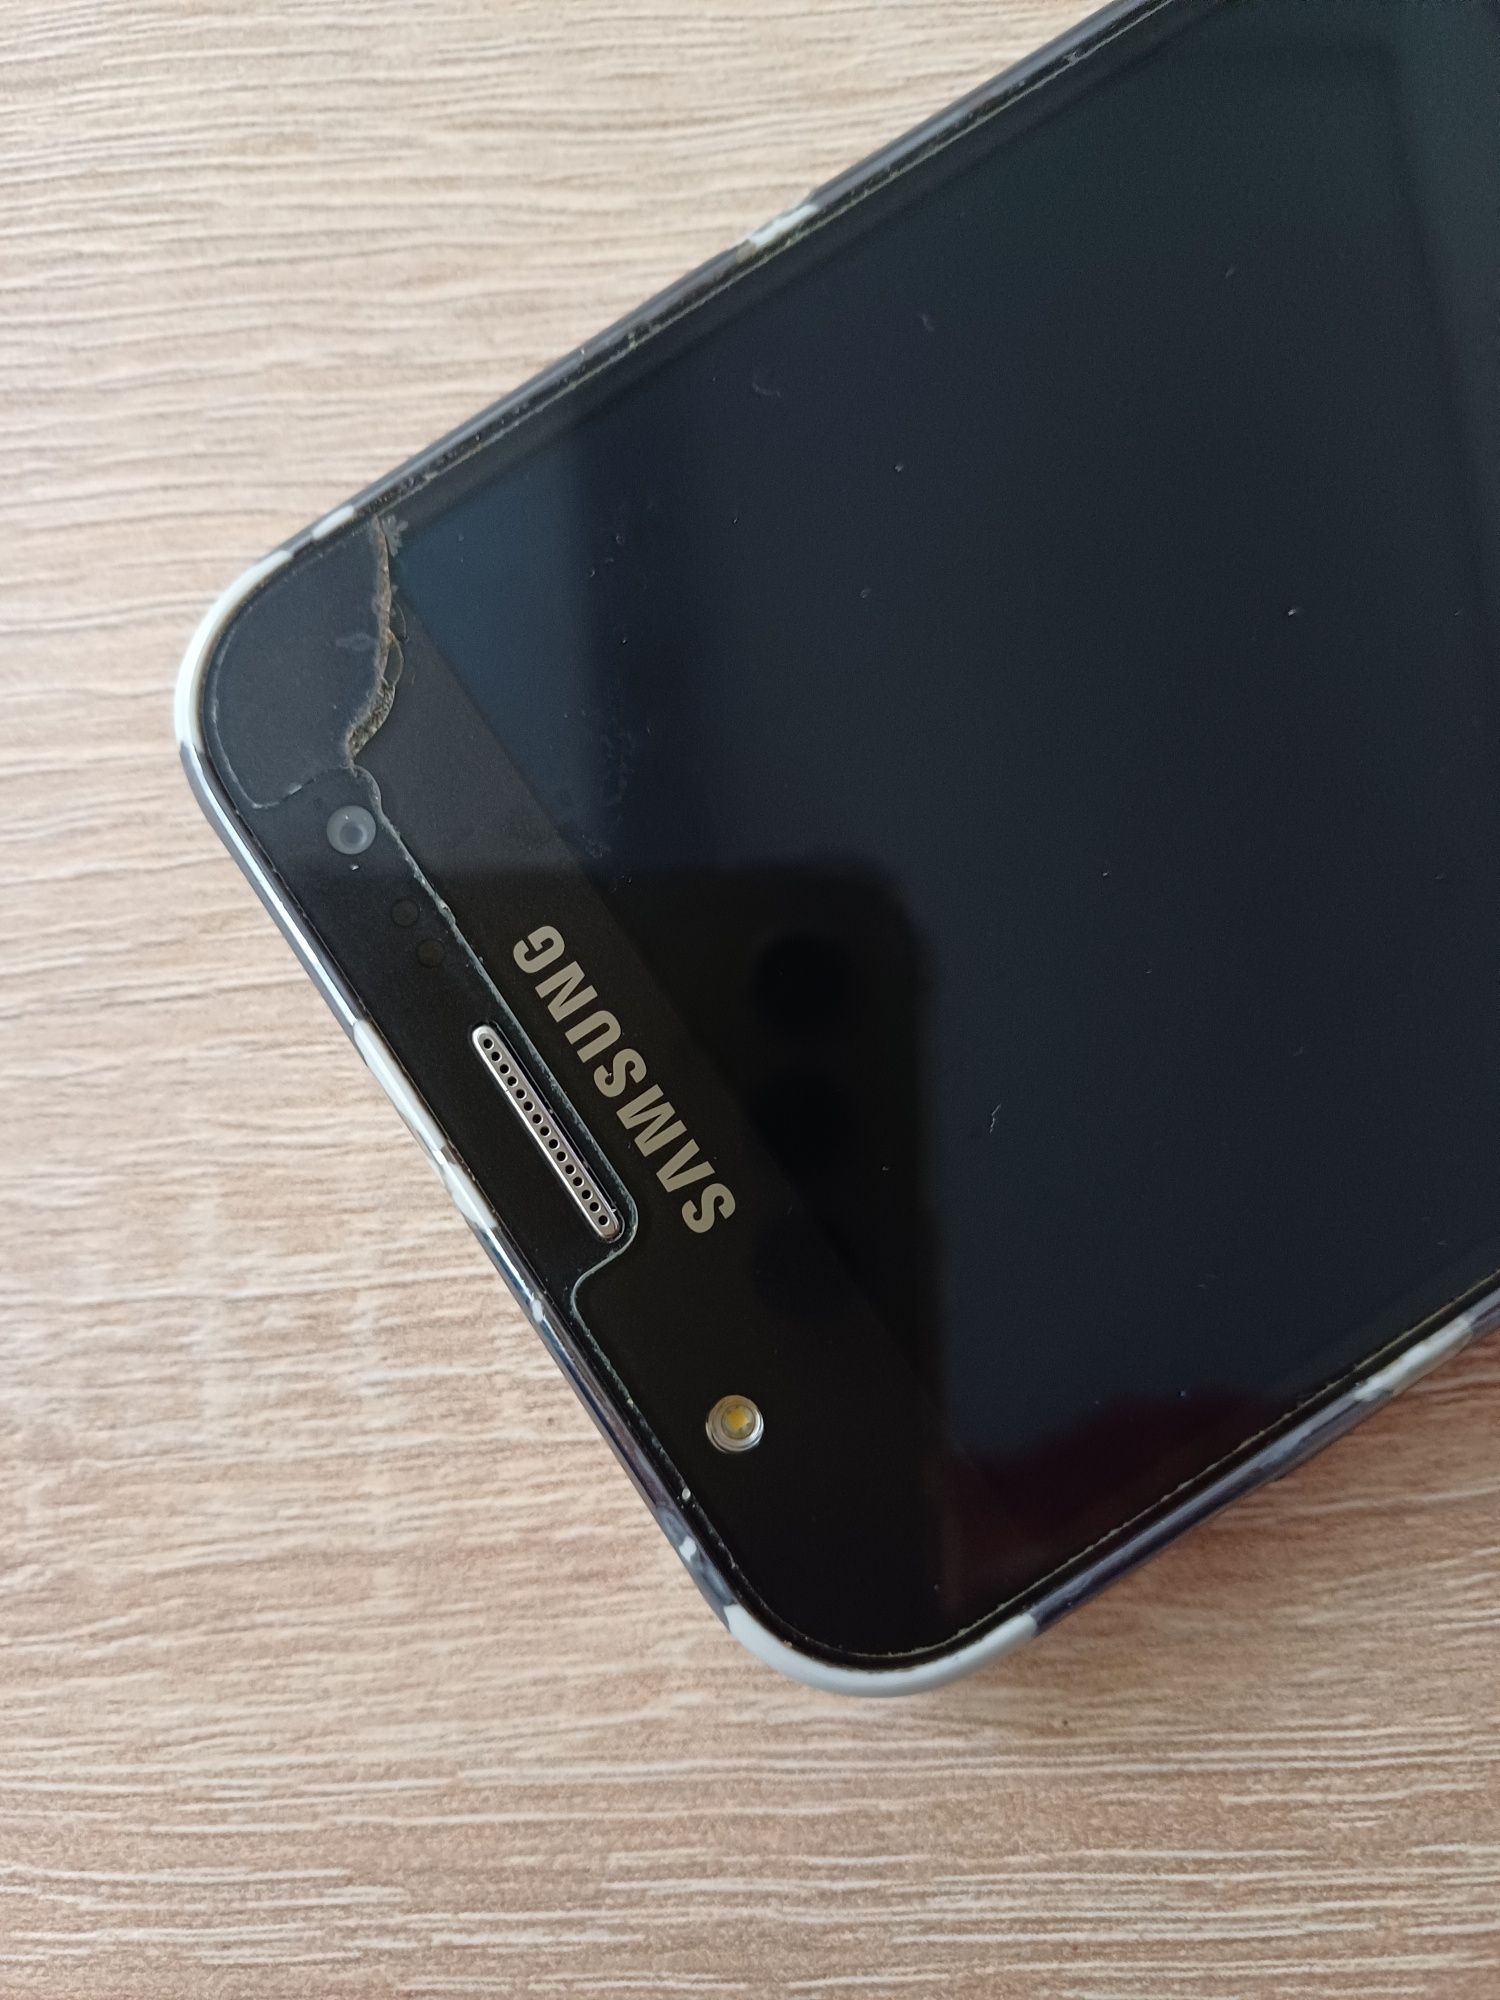 Samsung Galaxy J5. Dual sim